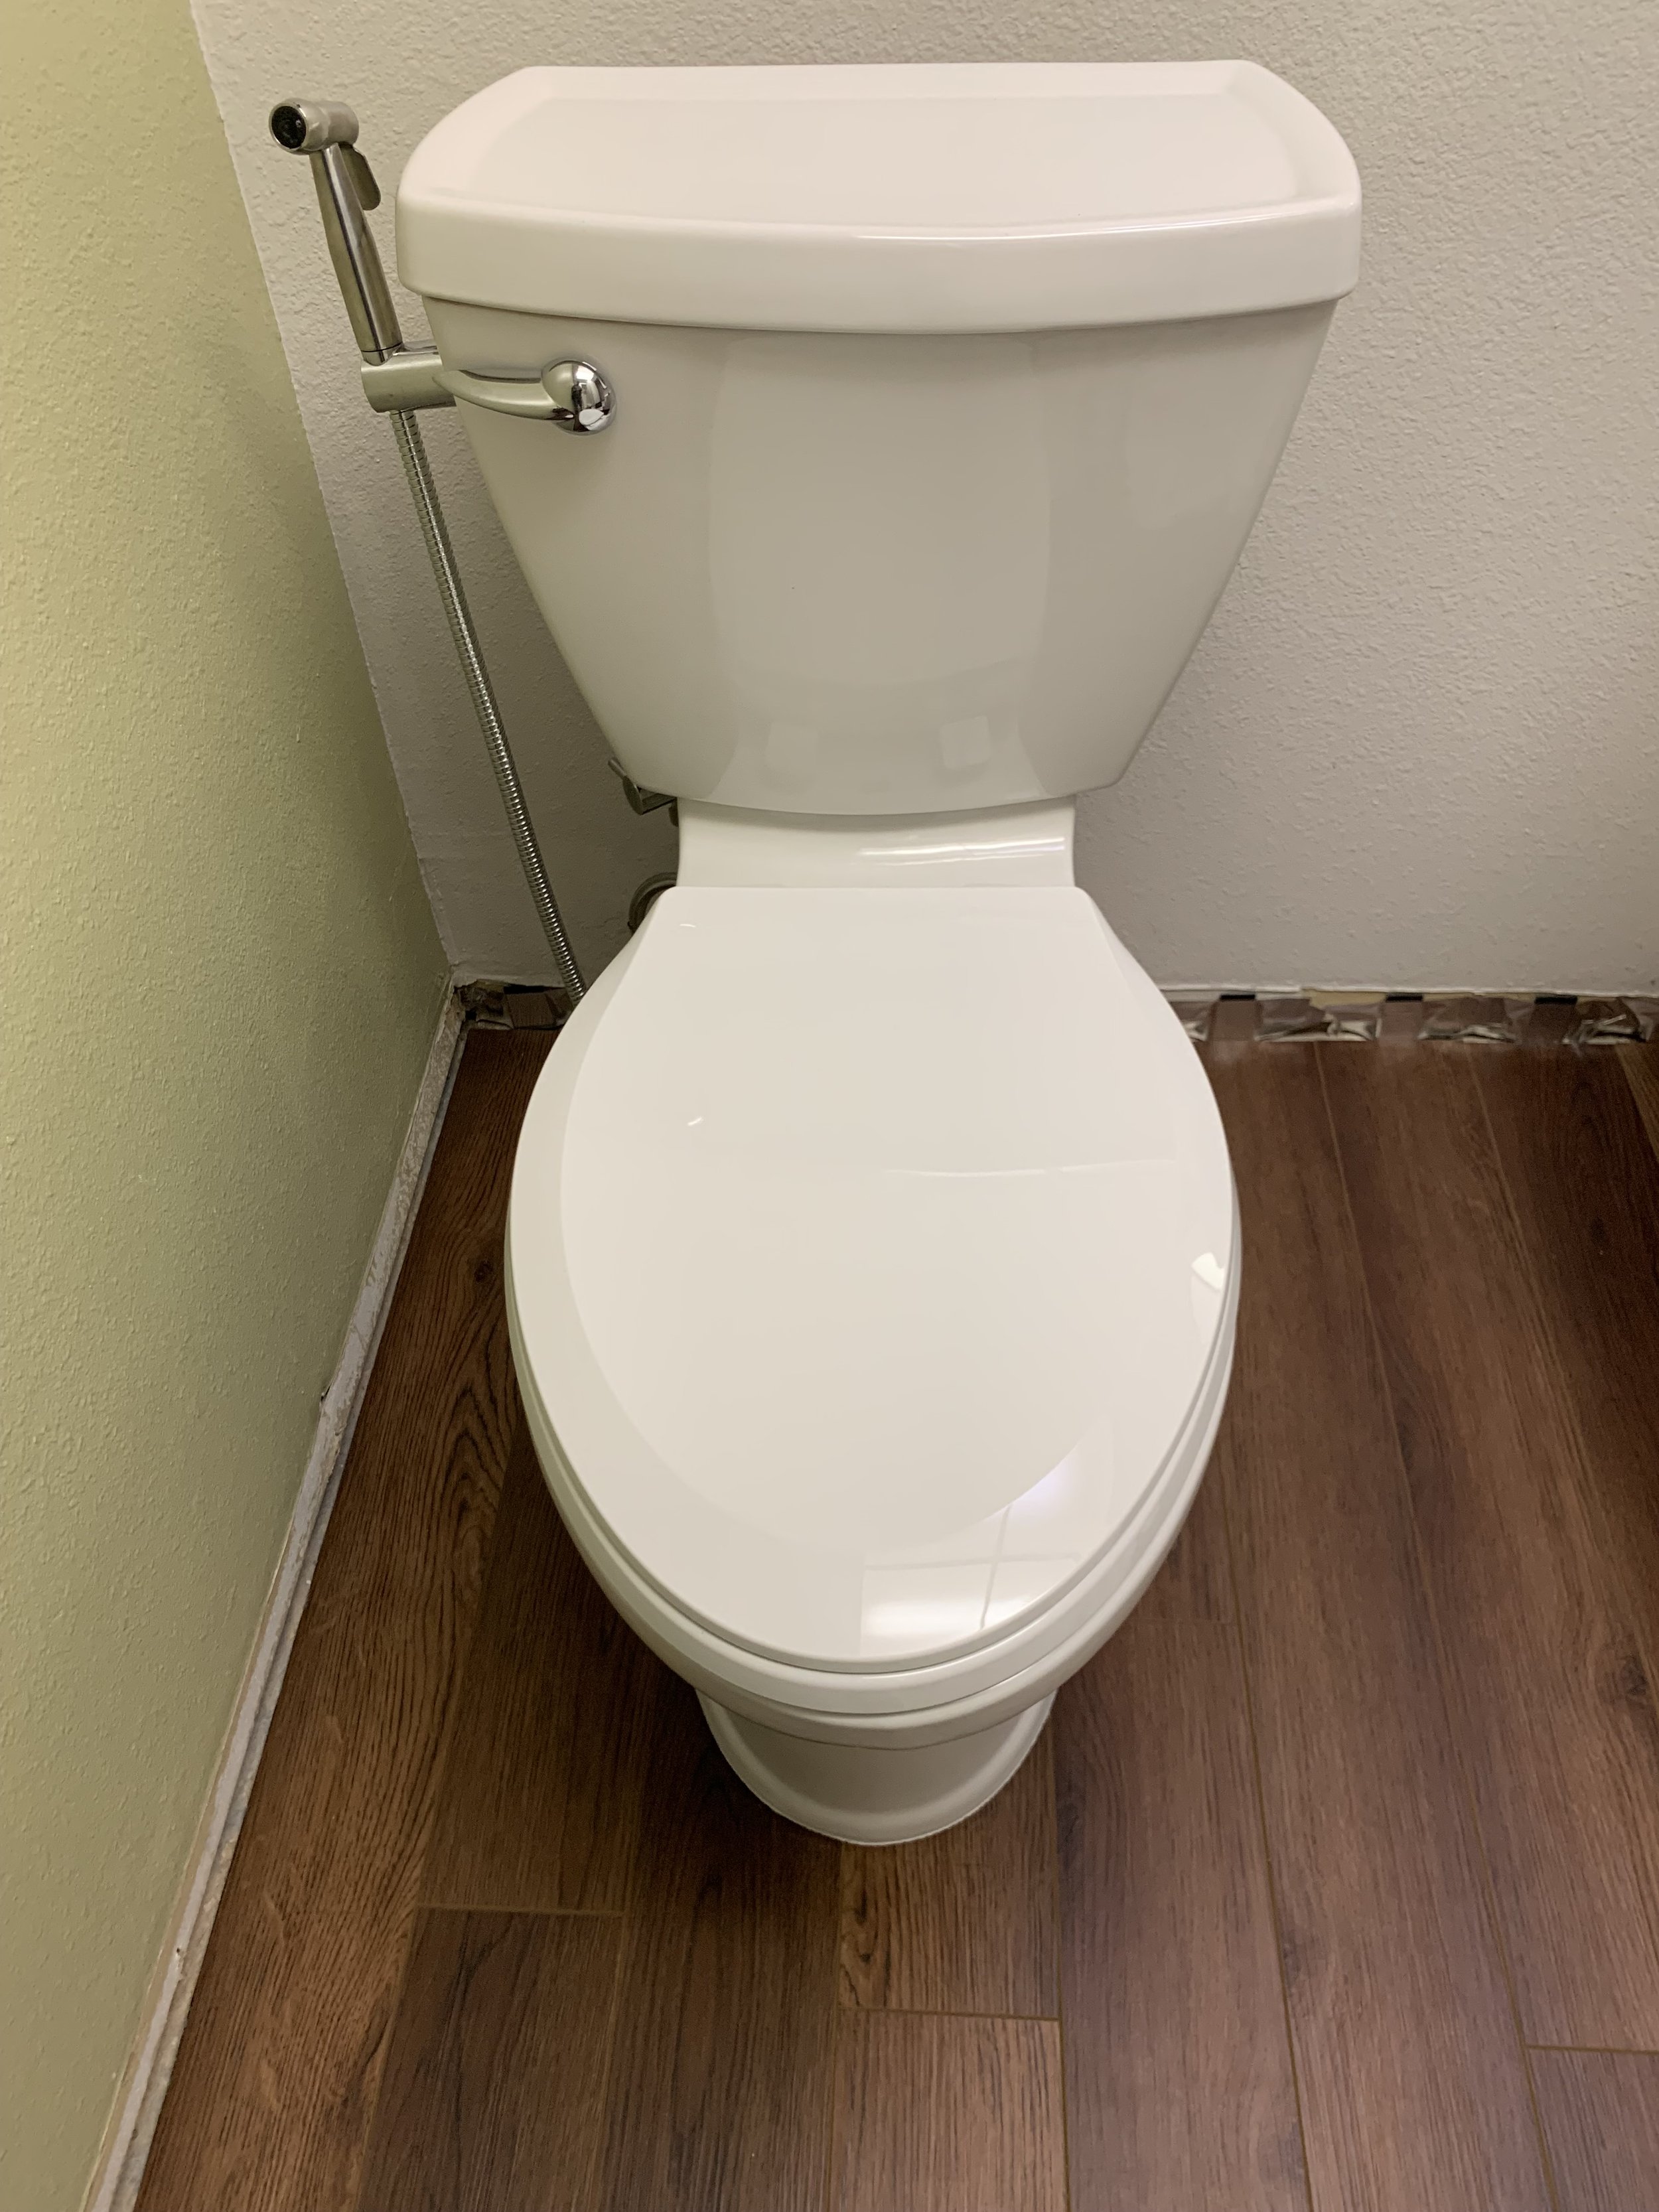 Clogged Toilet Drain Repairs In Ocala, FL